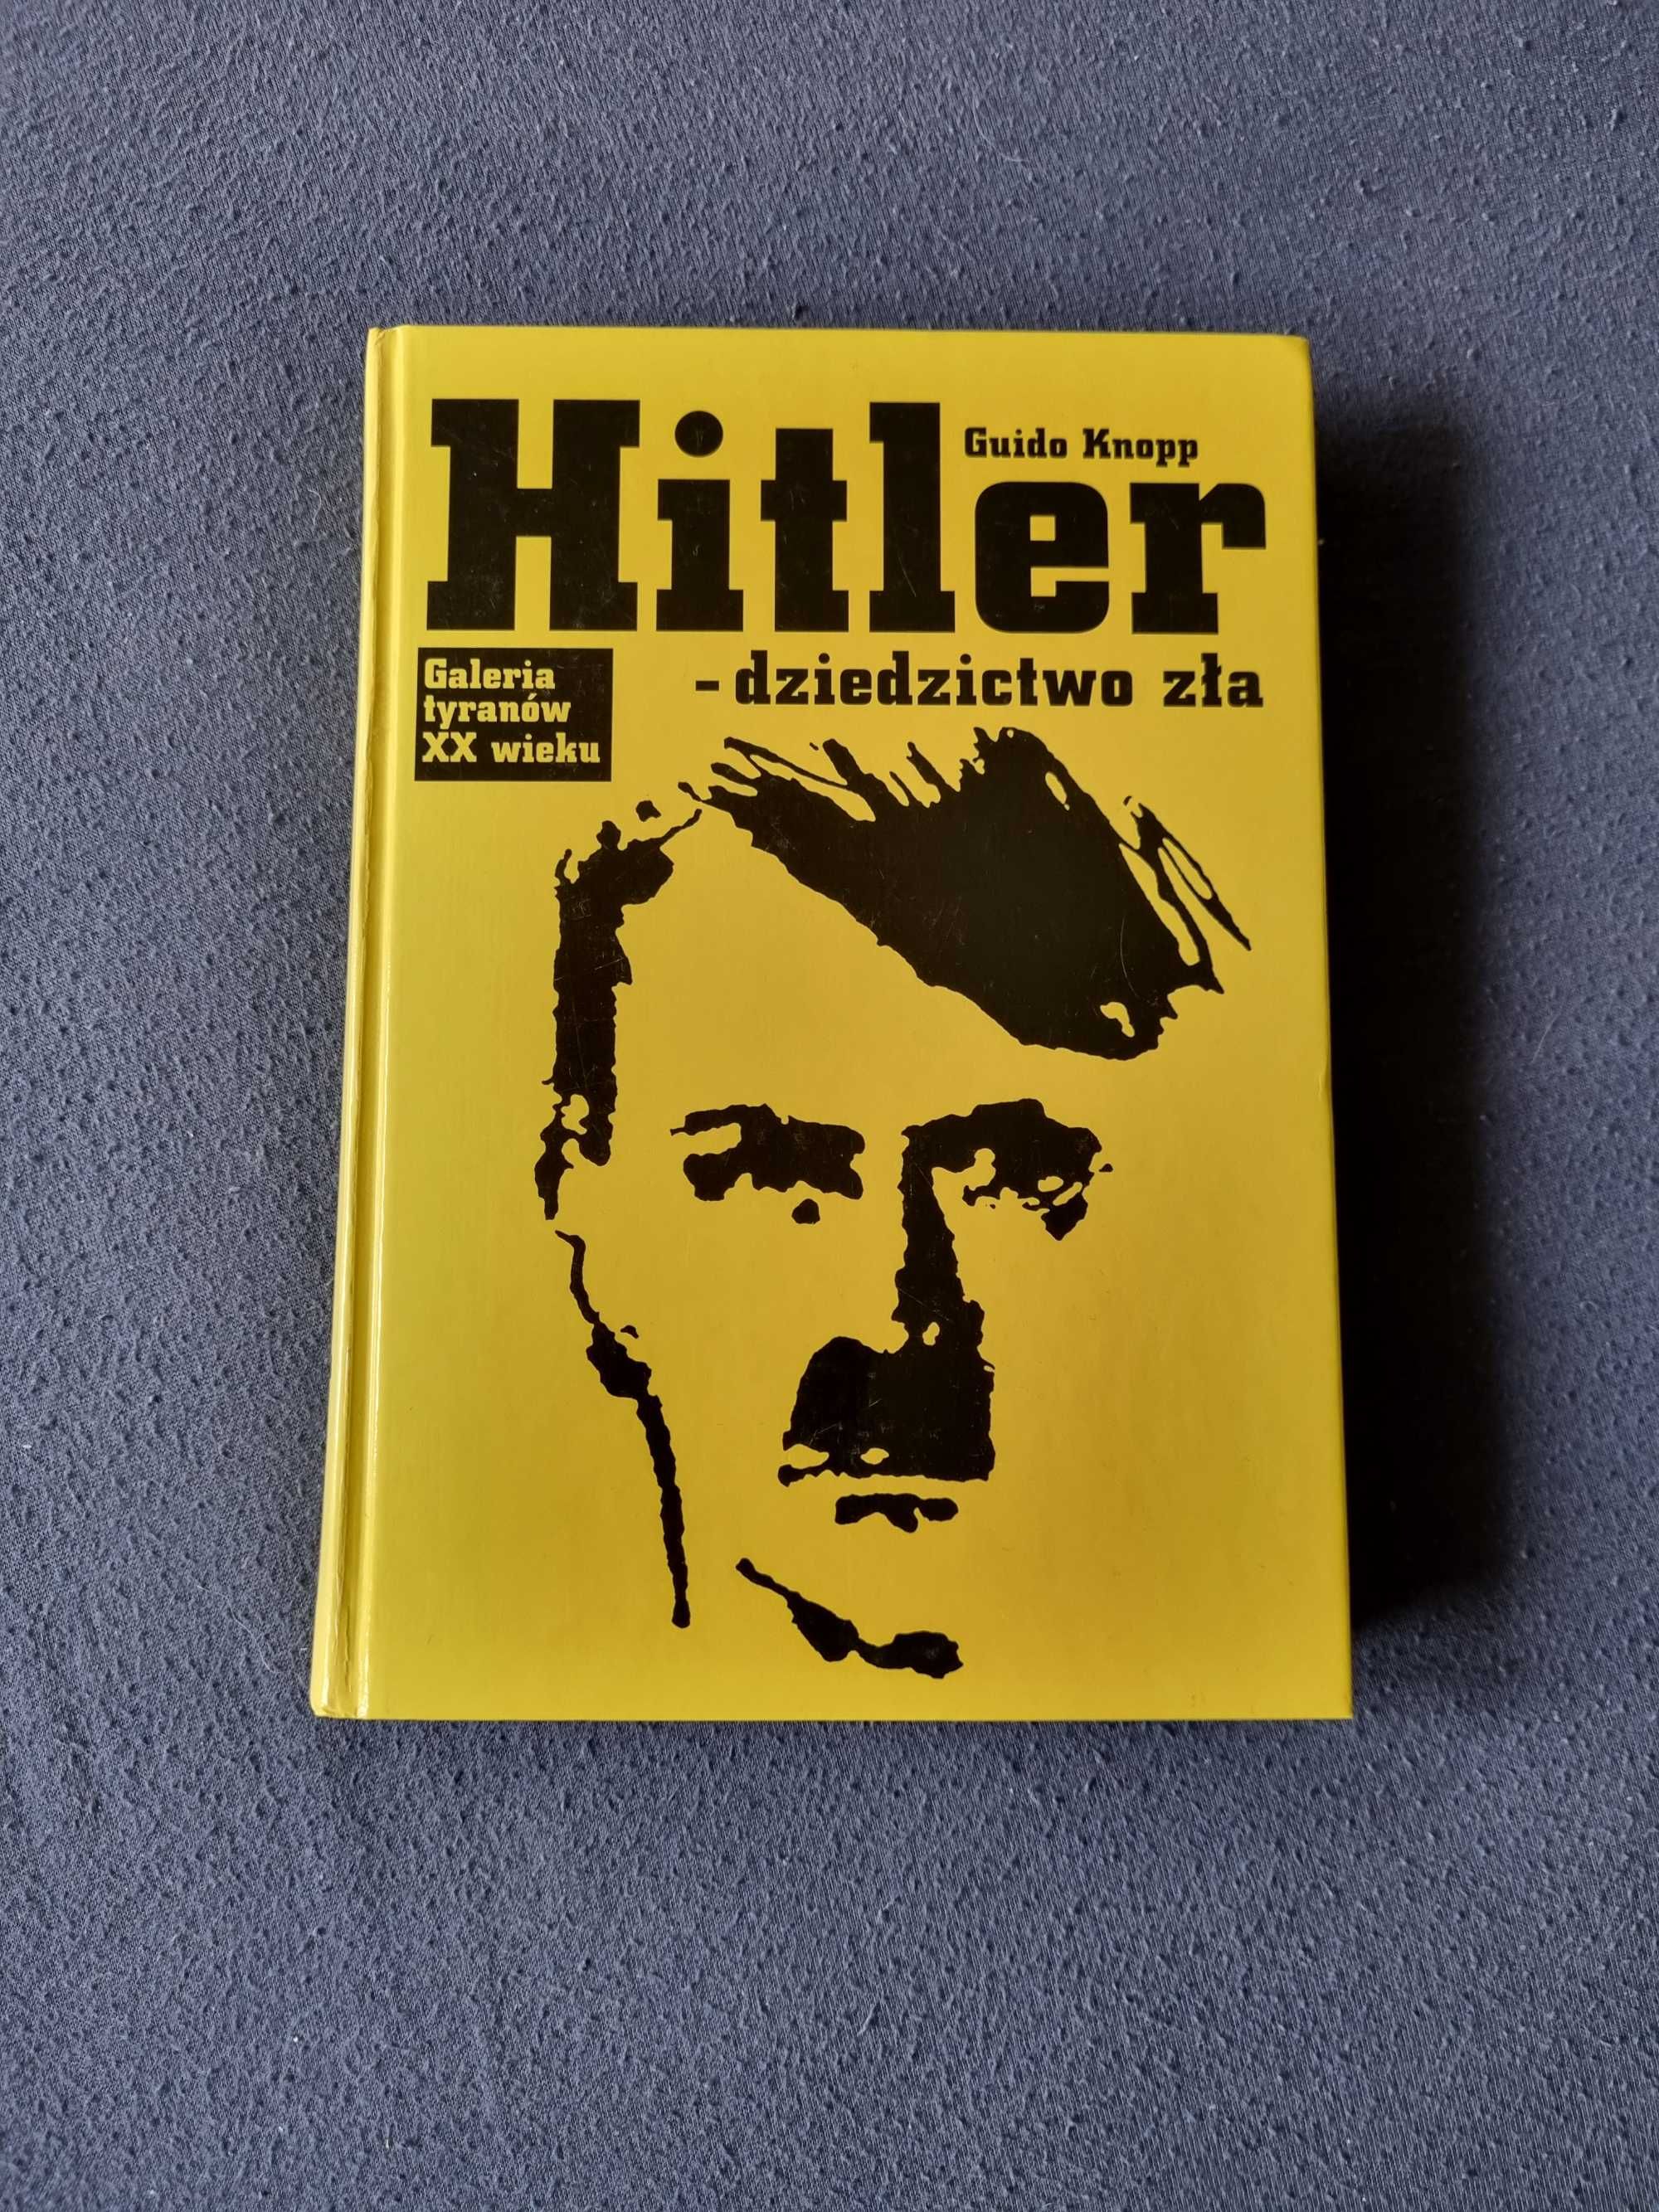 Hitler - dziedzictwo zła. Guido Knopp